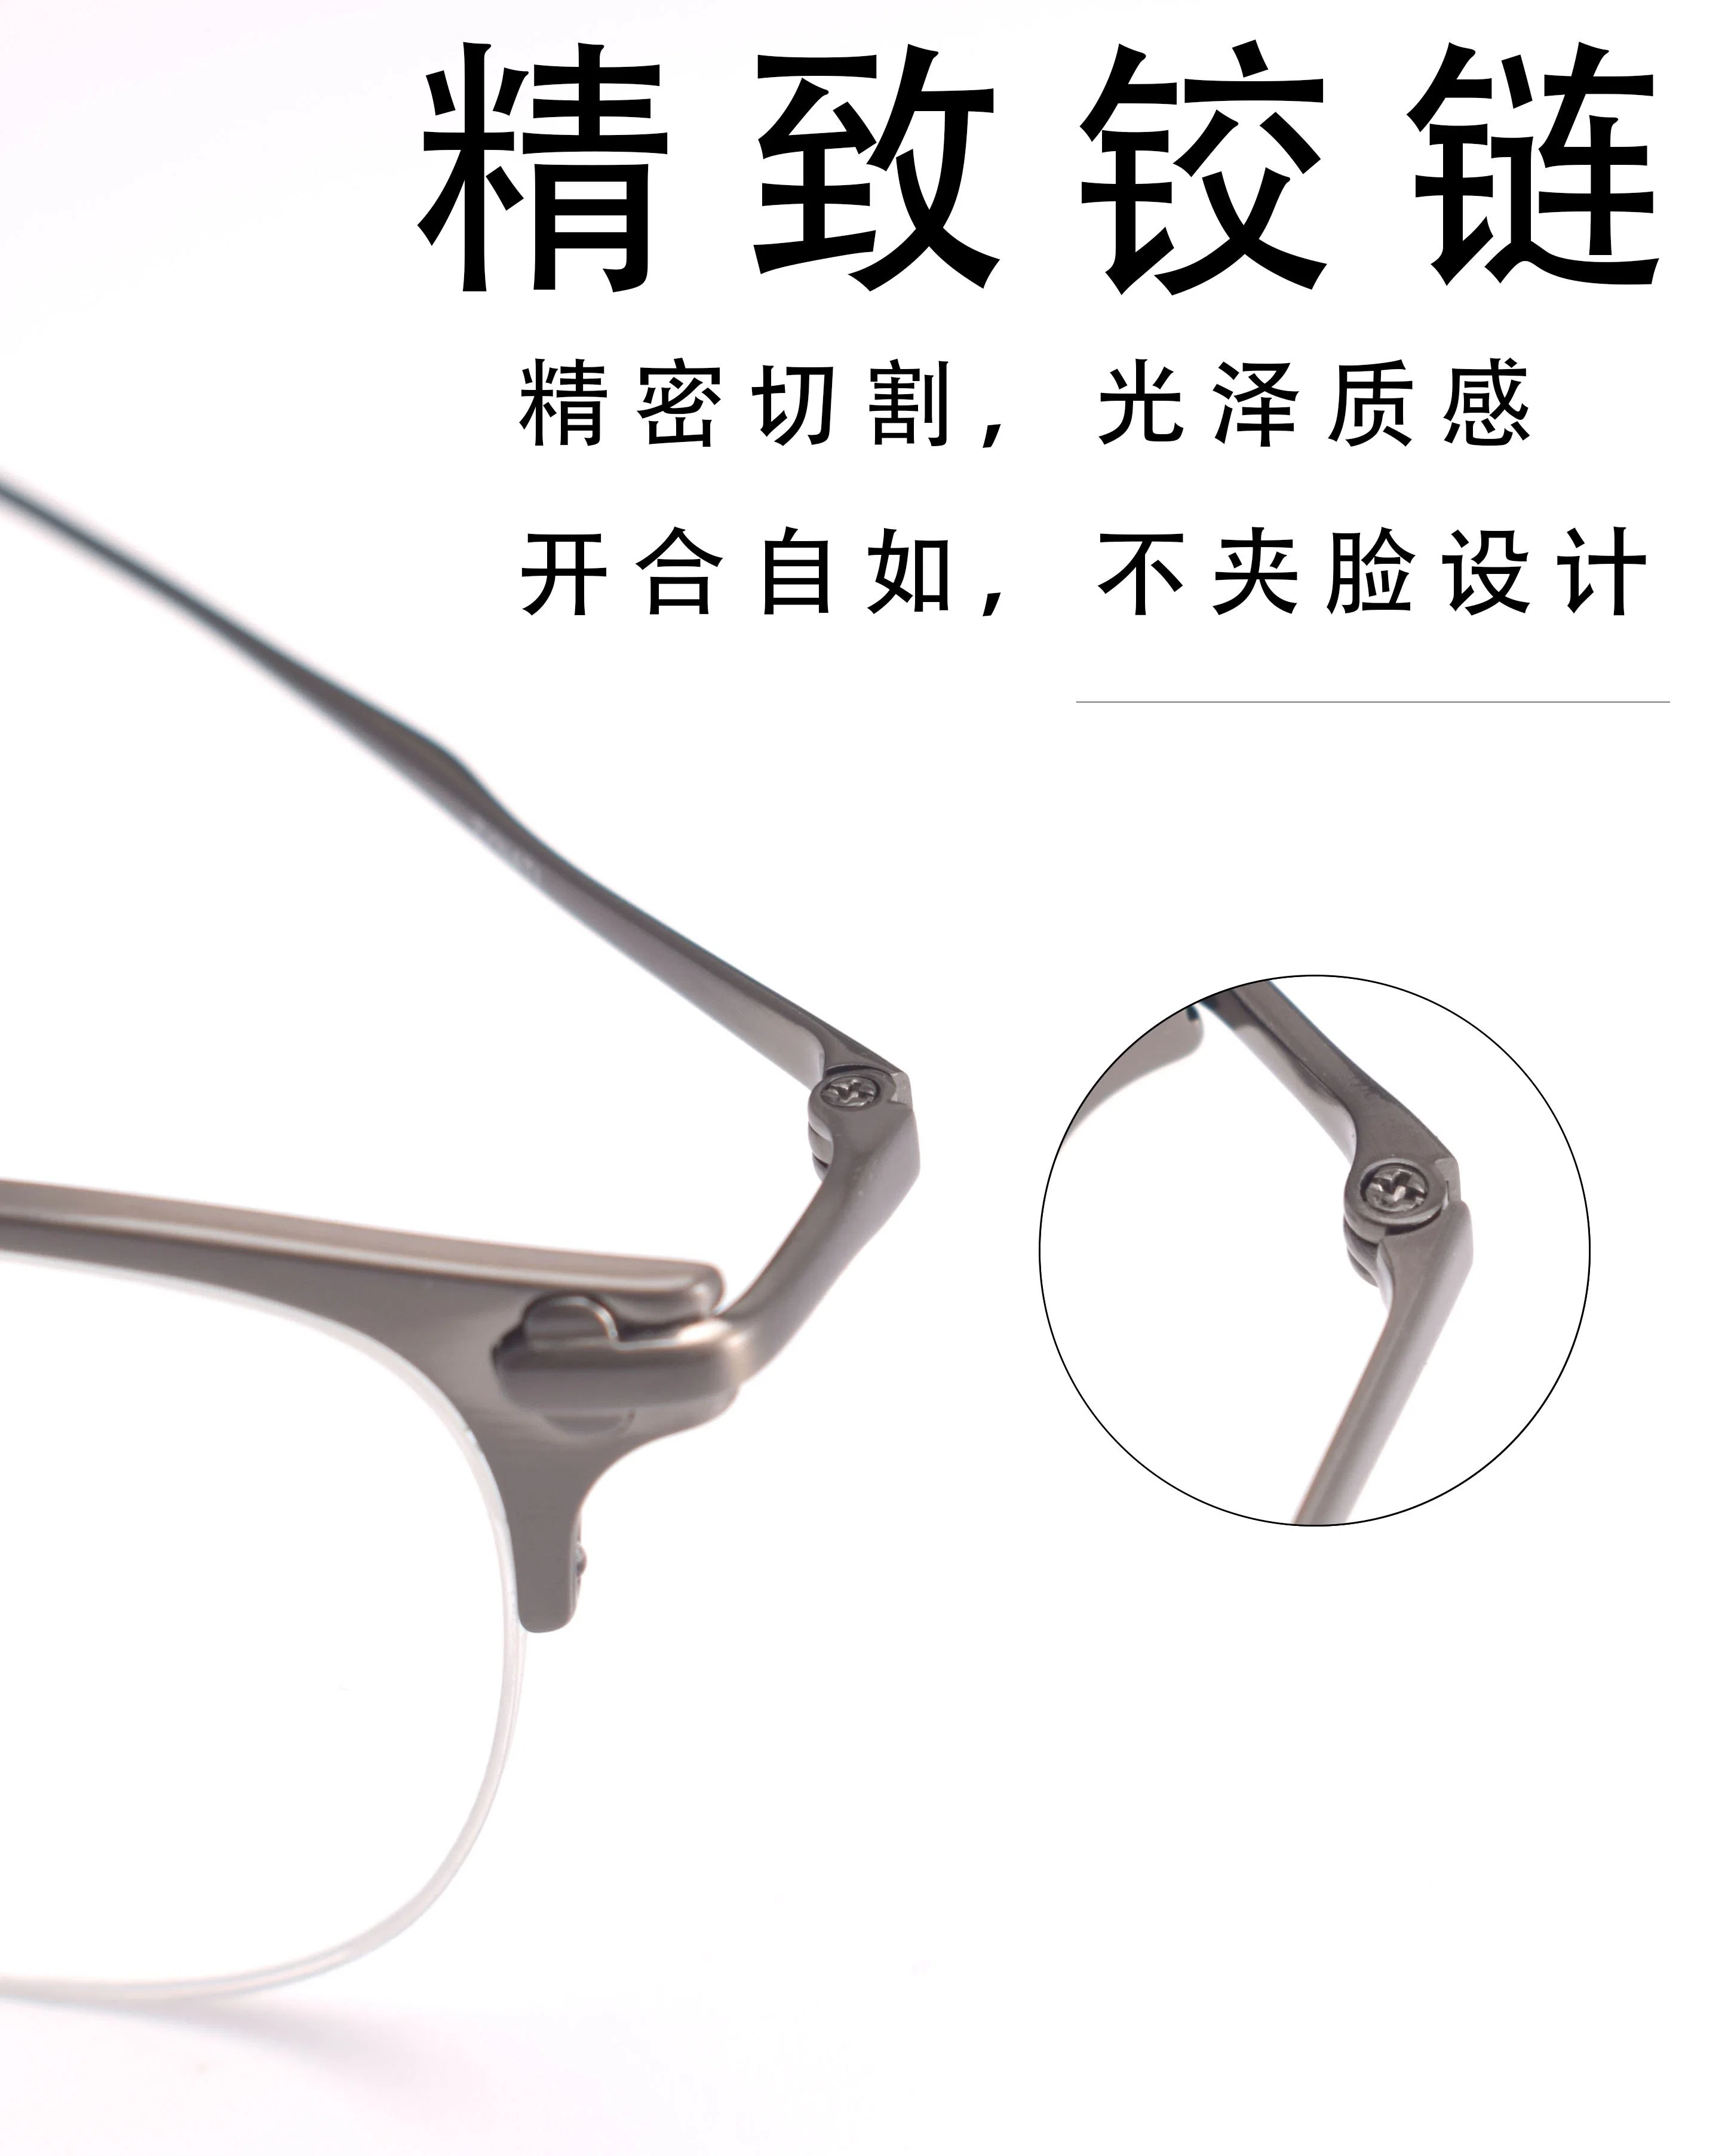 Zyhati Vintage Luxury Classic Brand Design Eyeglasses Old School Optical Frames Prescription Eyeglasses Frames for Men